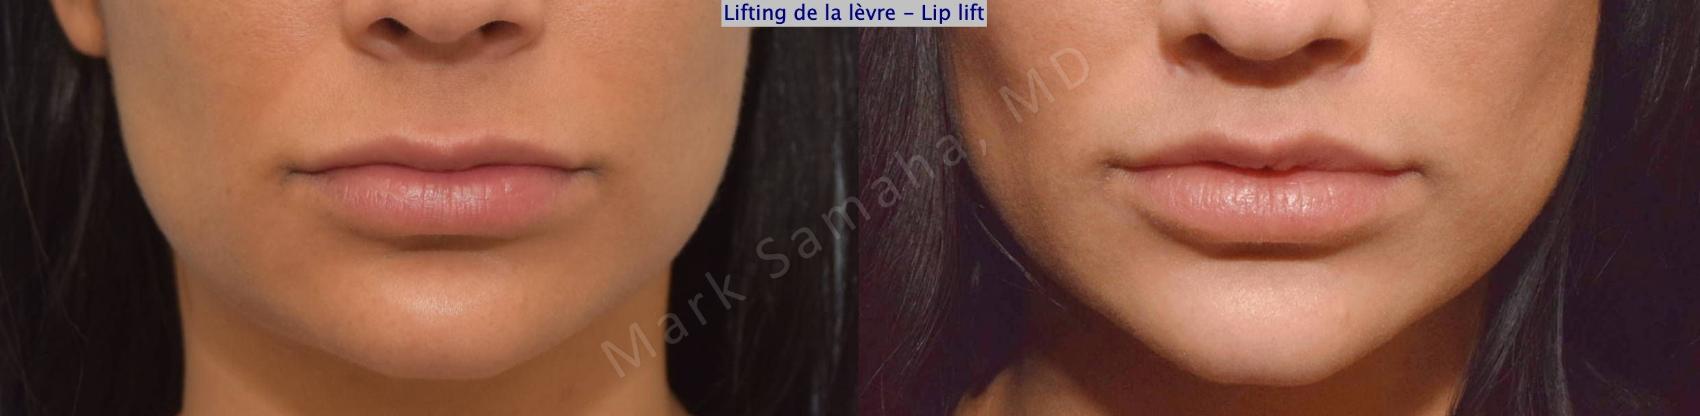 Before & After Lifting de la lèvre supérieure / Lip Lift  Case 172 Front View in Montreal, QC